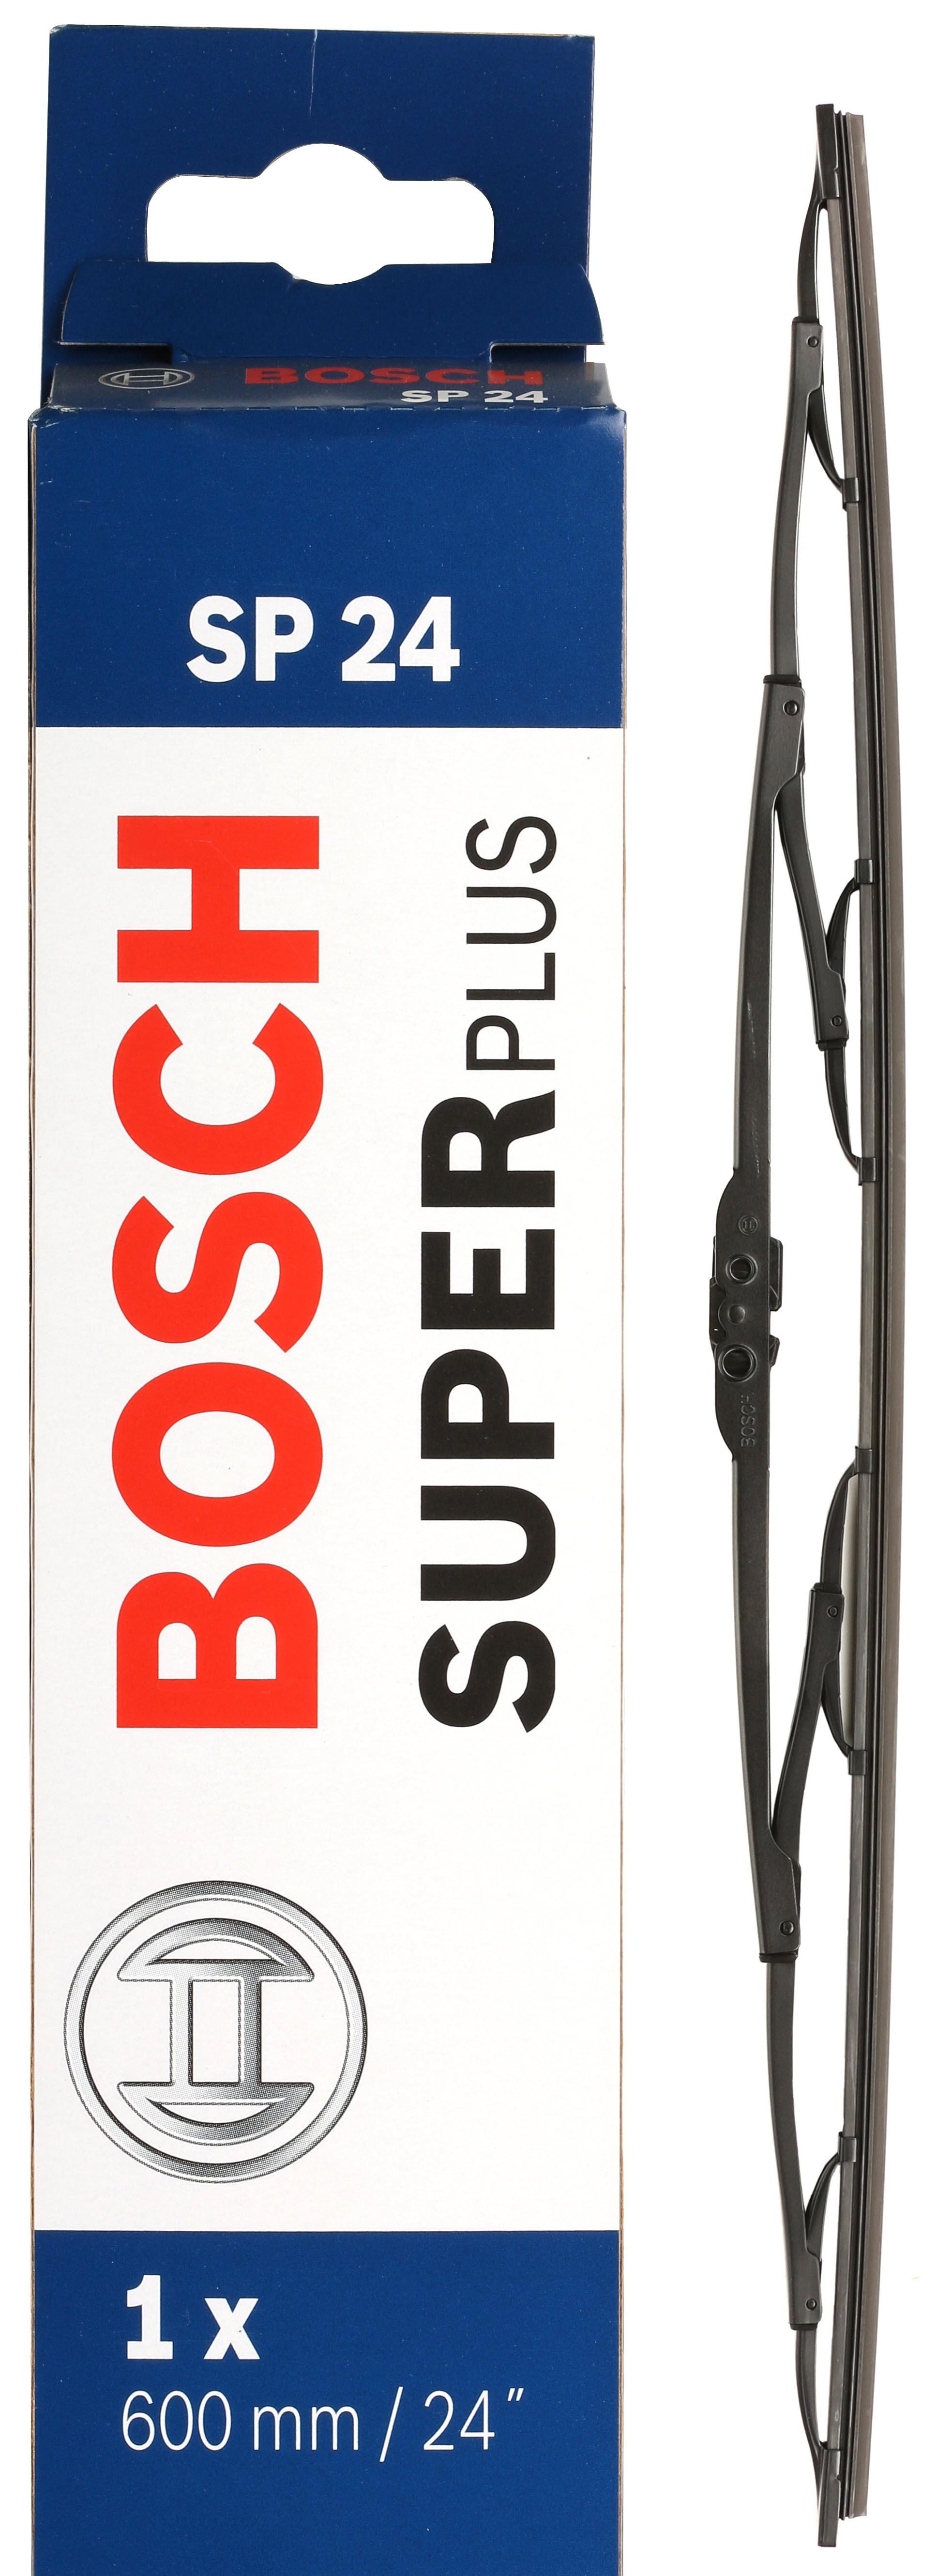 Bosch Sp24 Wiper Blade - Single